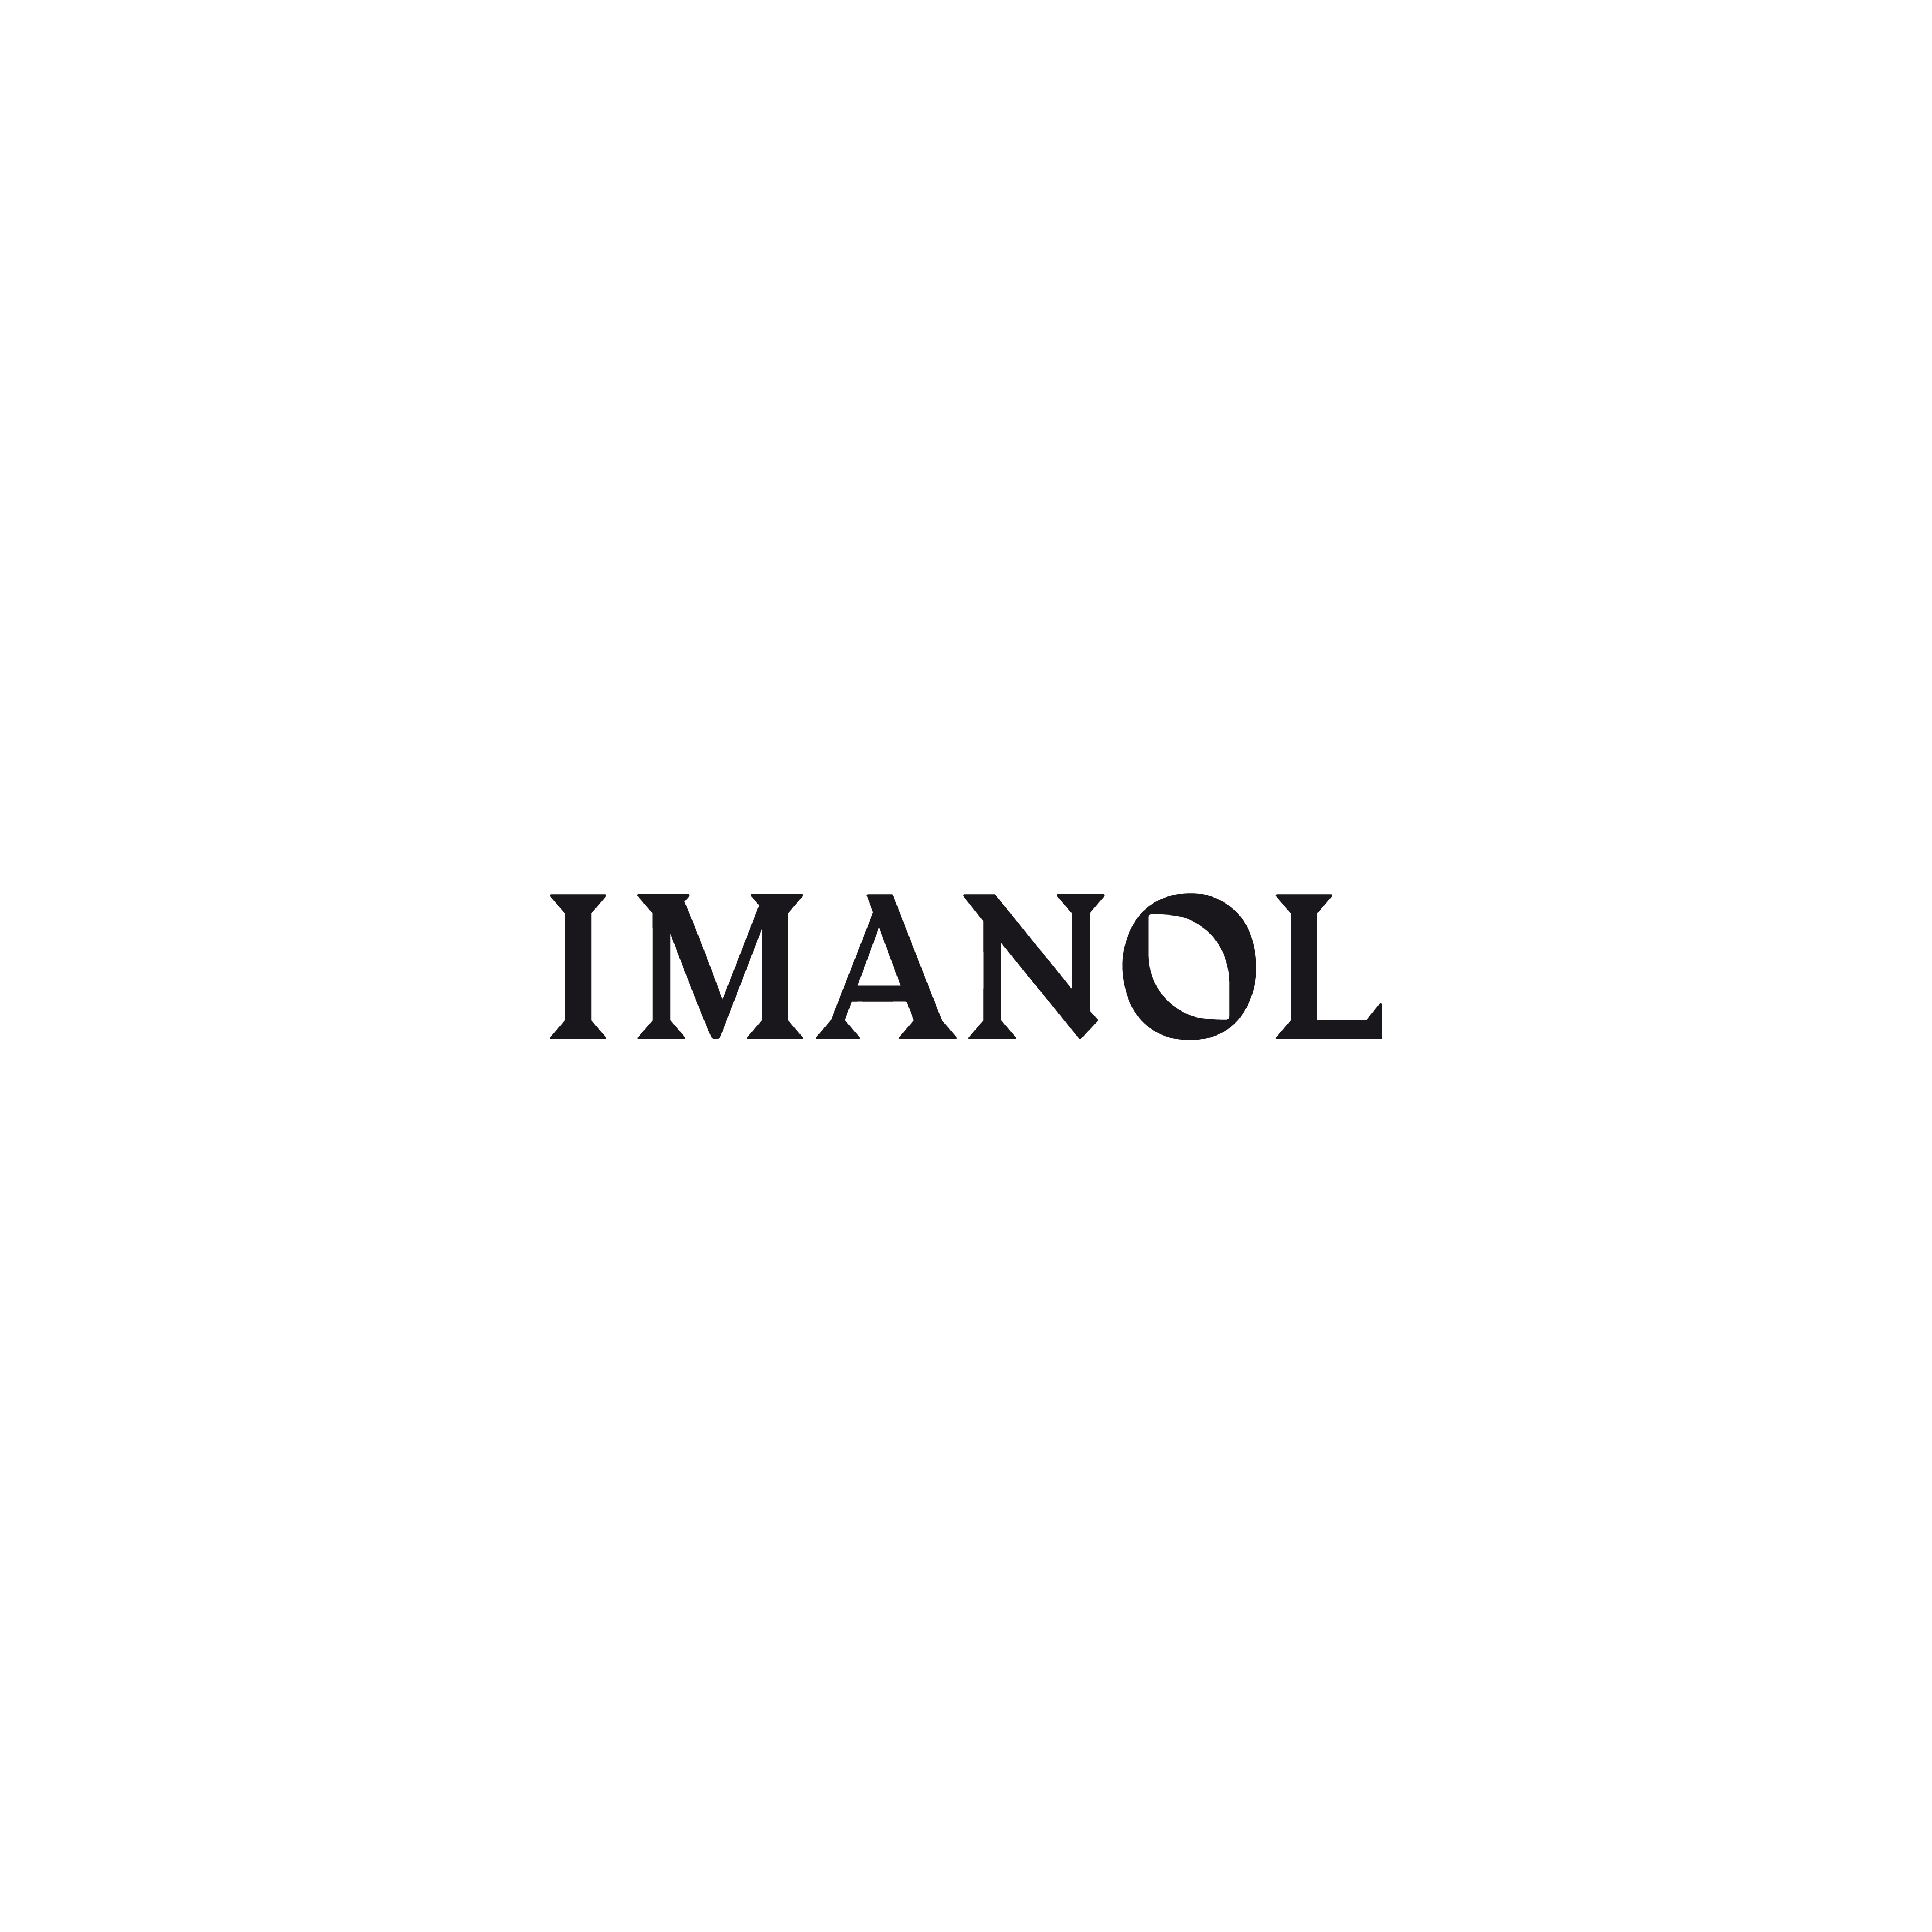 Restaurante: Imanol